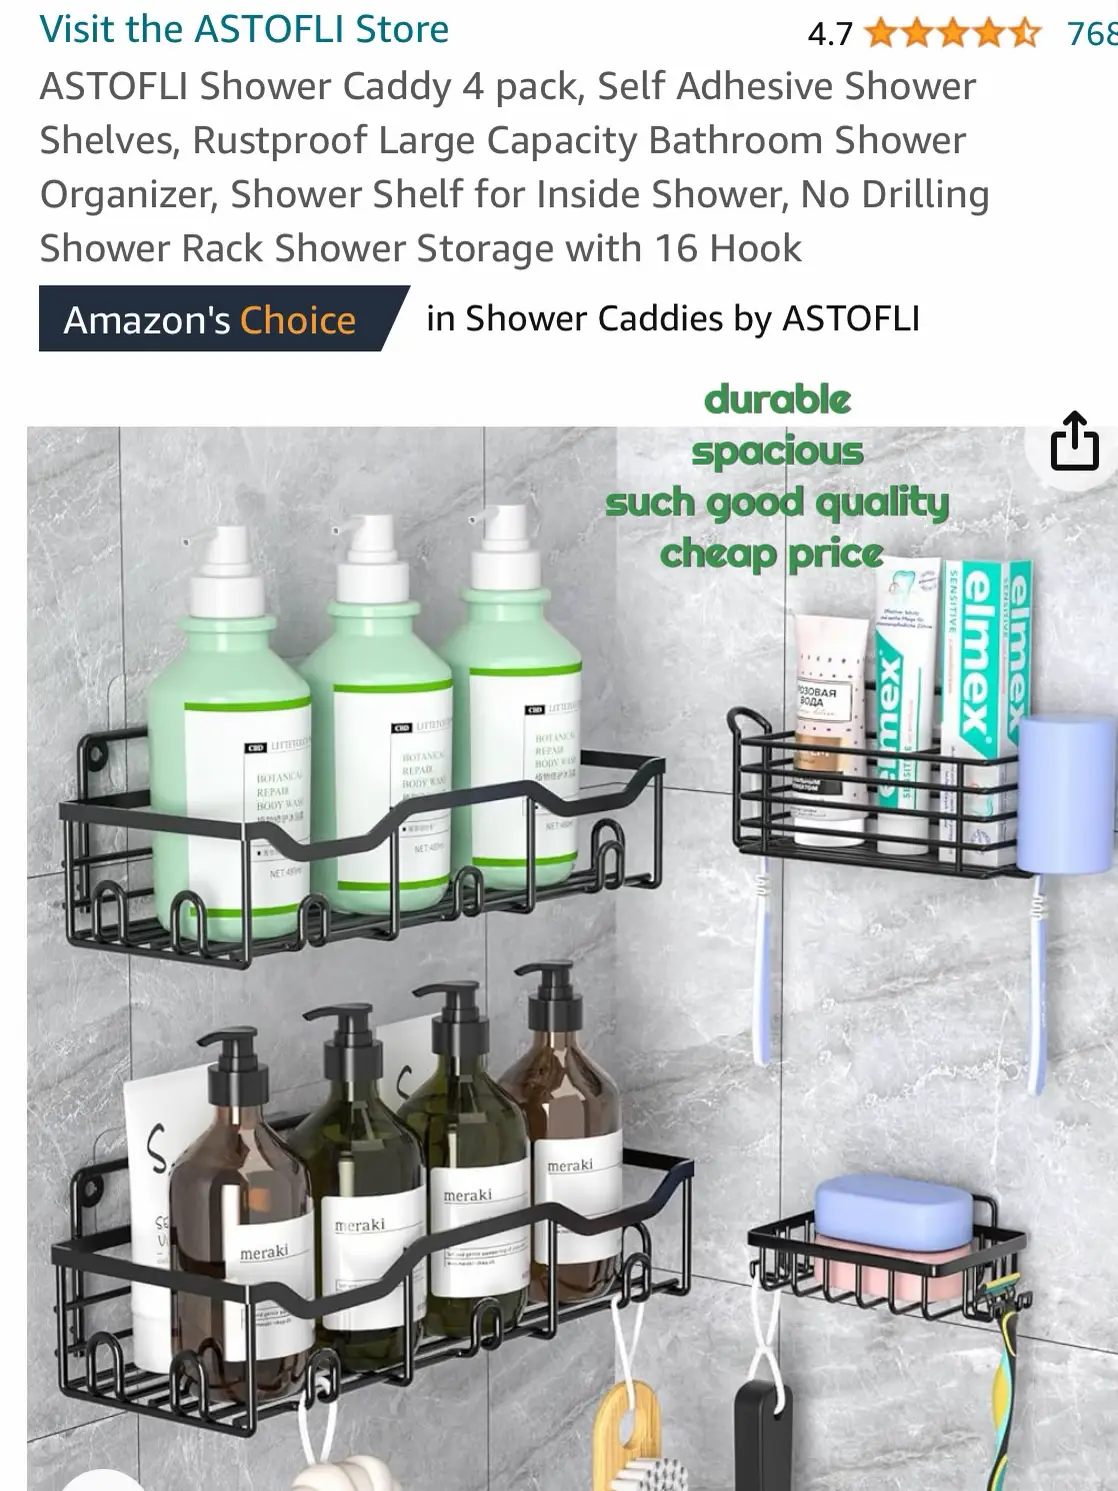 ASTOFLI Shower Caddy 4 pack, Self Adhesive Shower Shelves, Rustproof Large